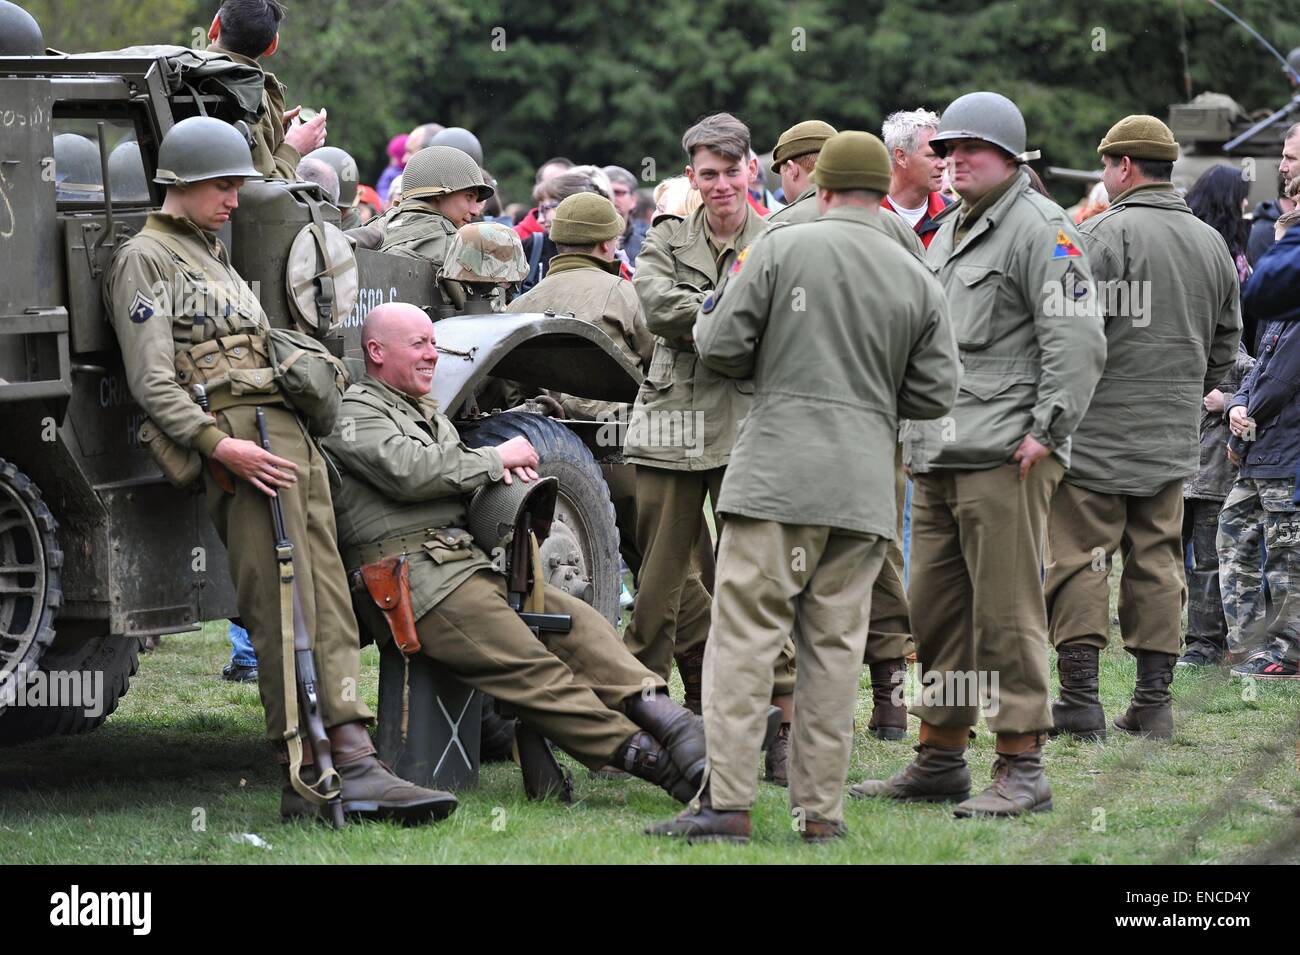 Pilsen, Czech Republic. 1st May, 2015. World War II re-enactor dressed ...